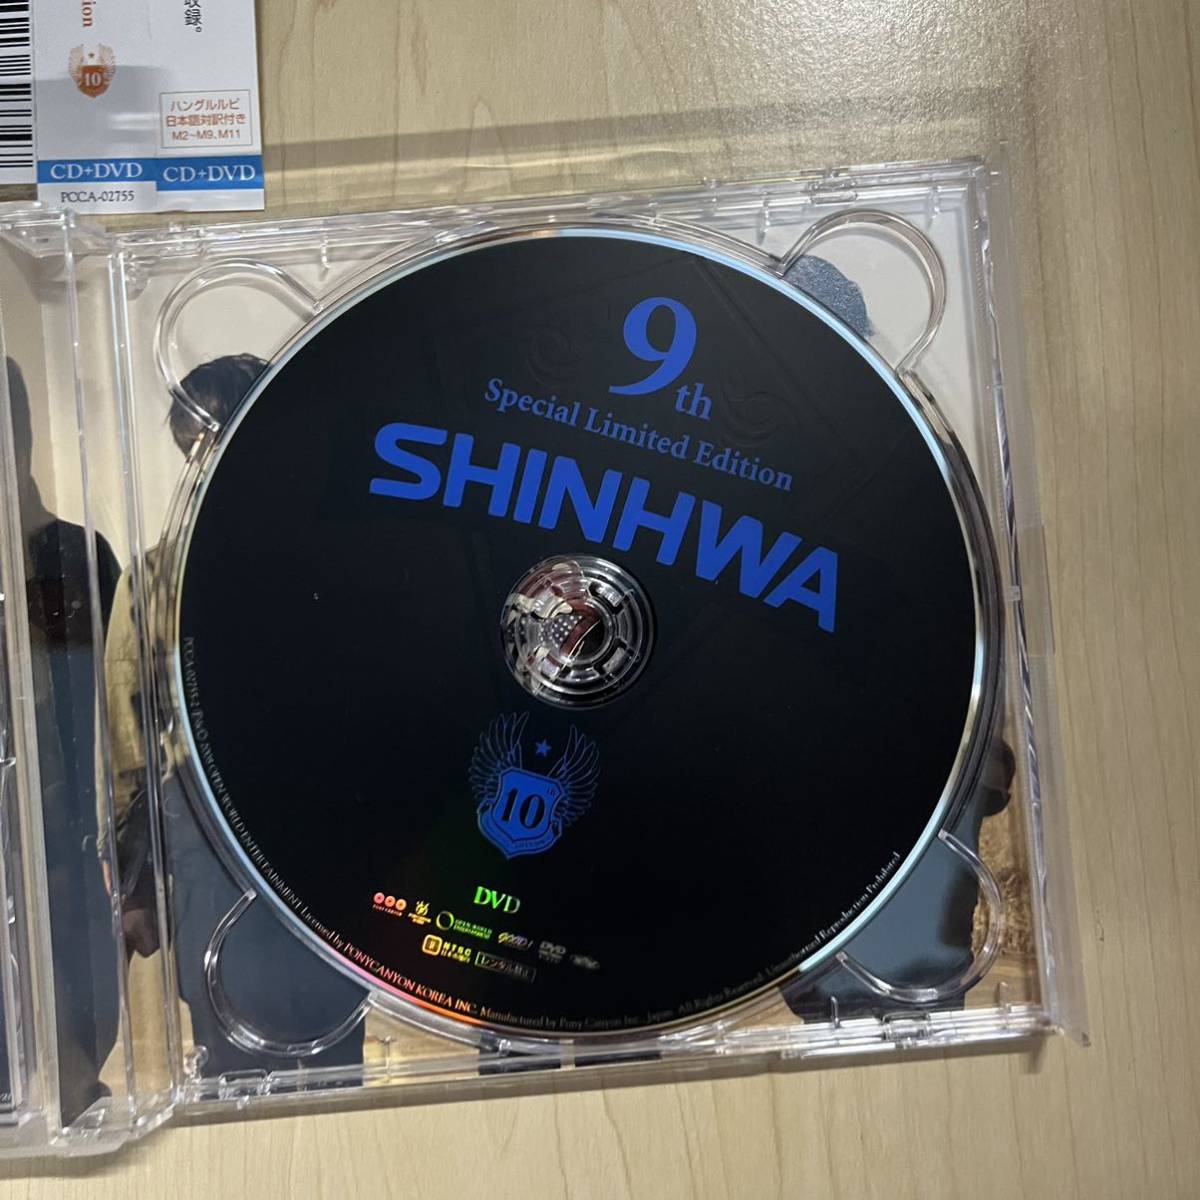 CD 神話 SHINHWA SHINHWA 9th Special Limited Edition 帯付 PCCA-2755 2枚組_画像3